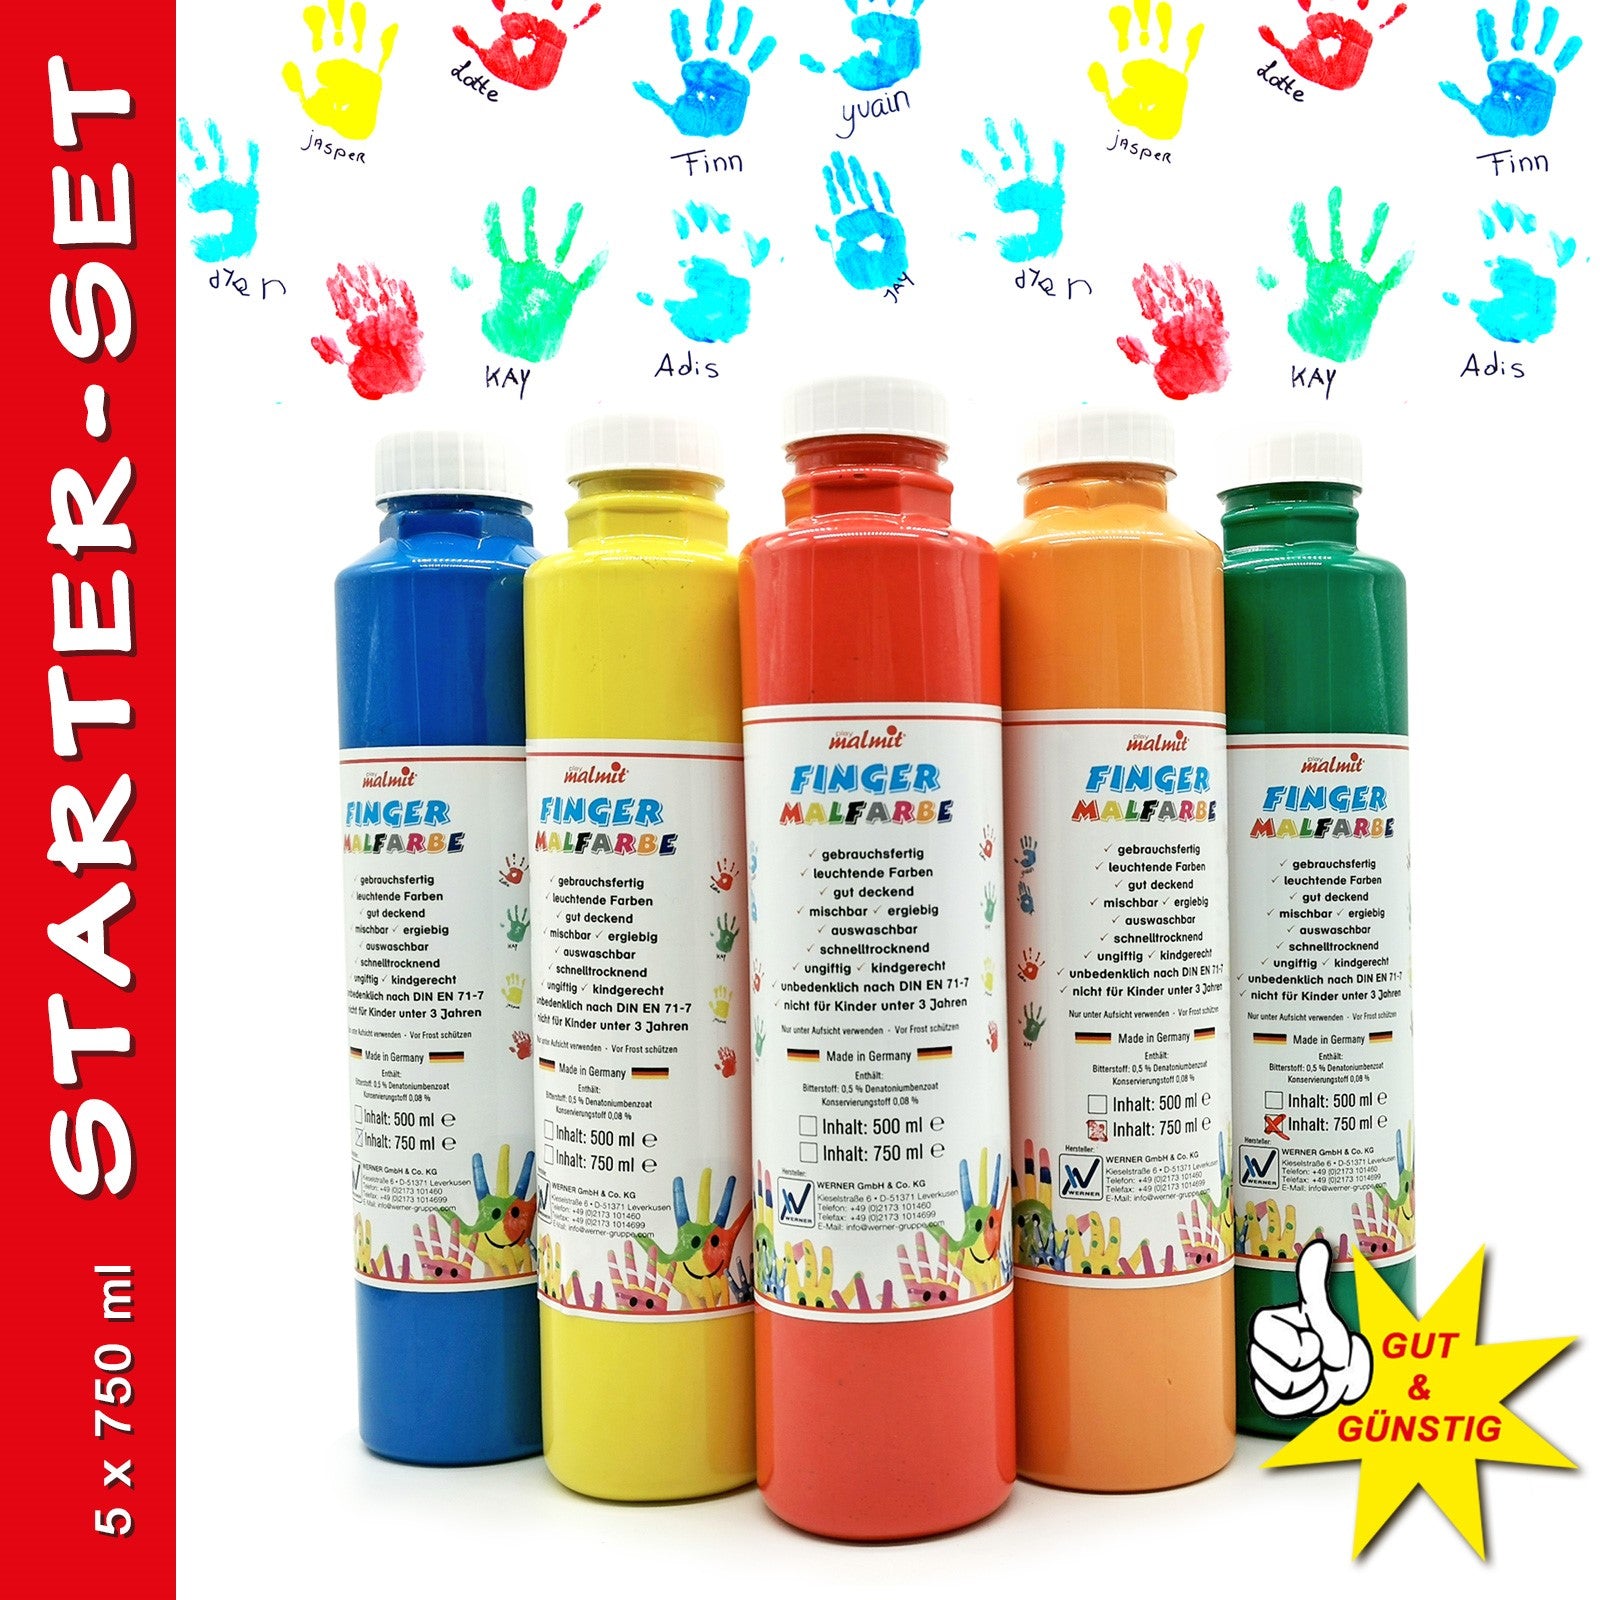 play malmit® Fingerfarben Fingermalfarben Fensterfarben Malfarben Kinderfarben 